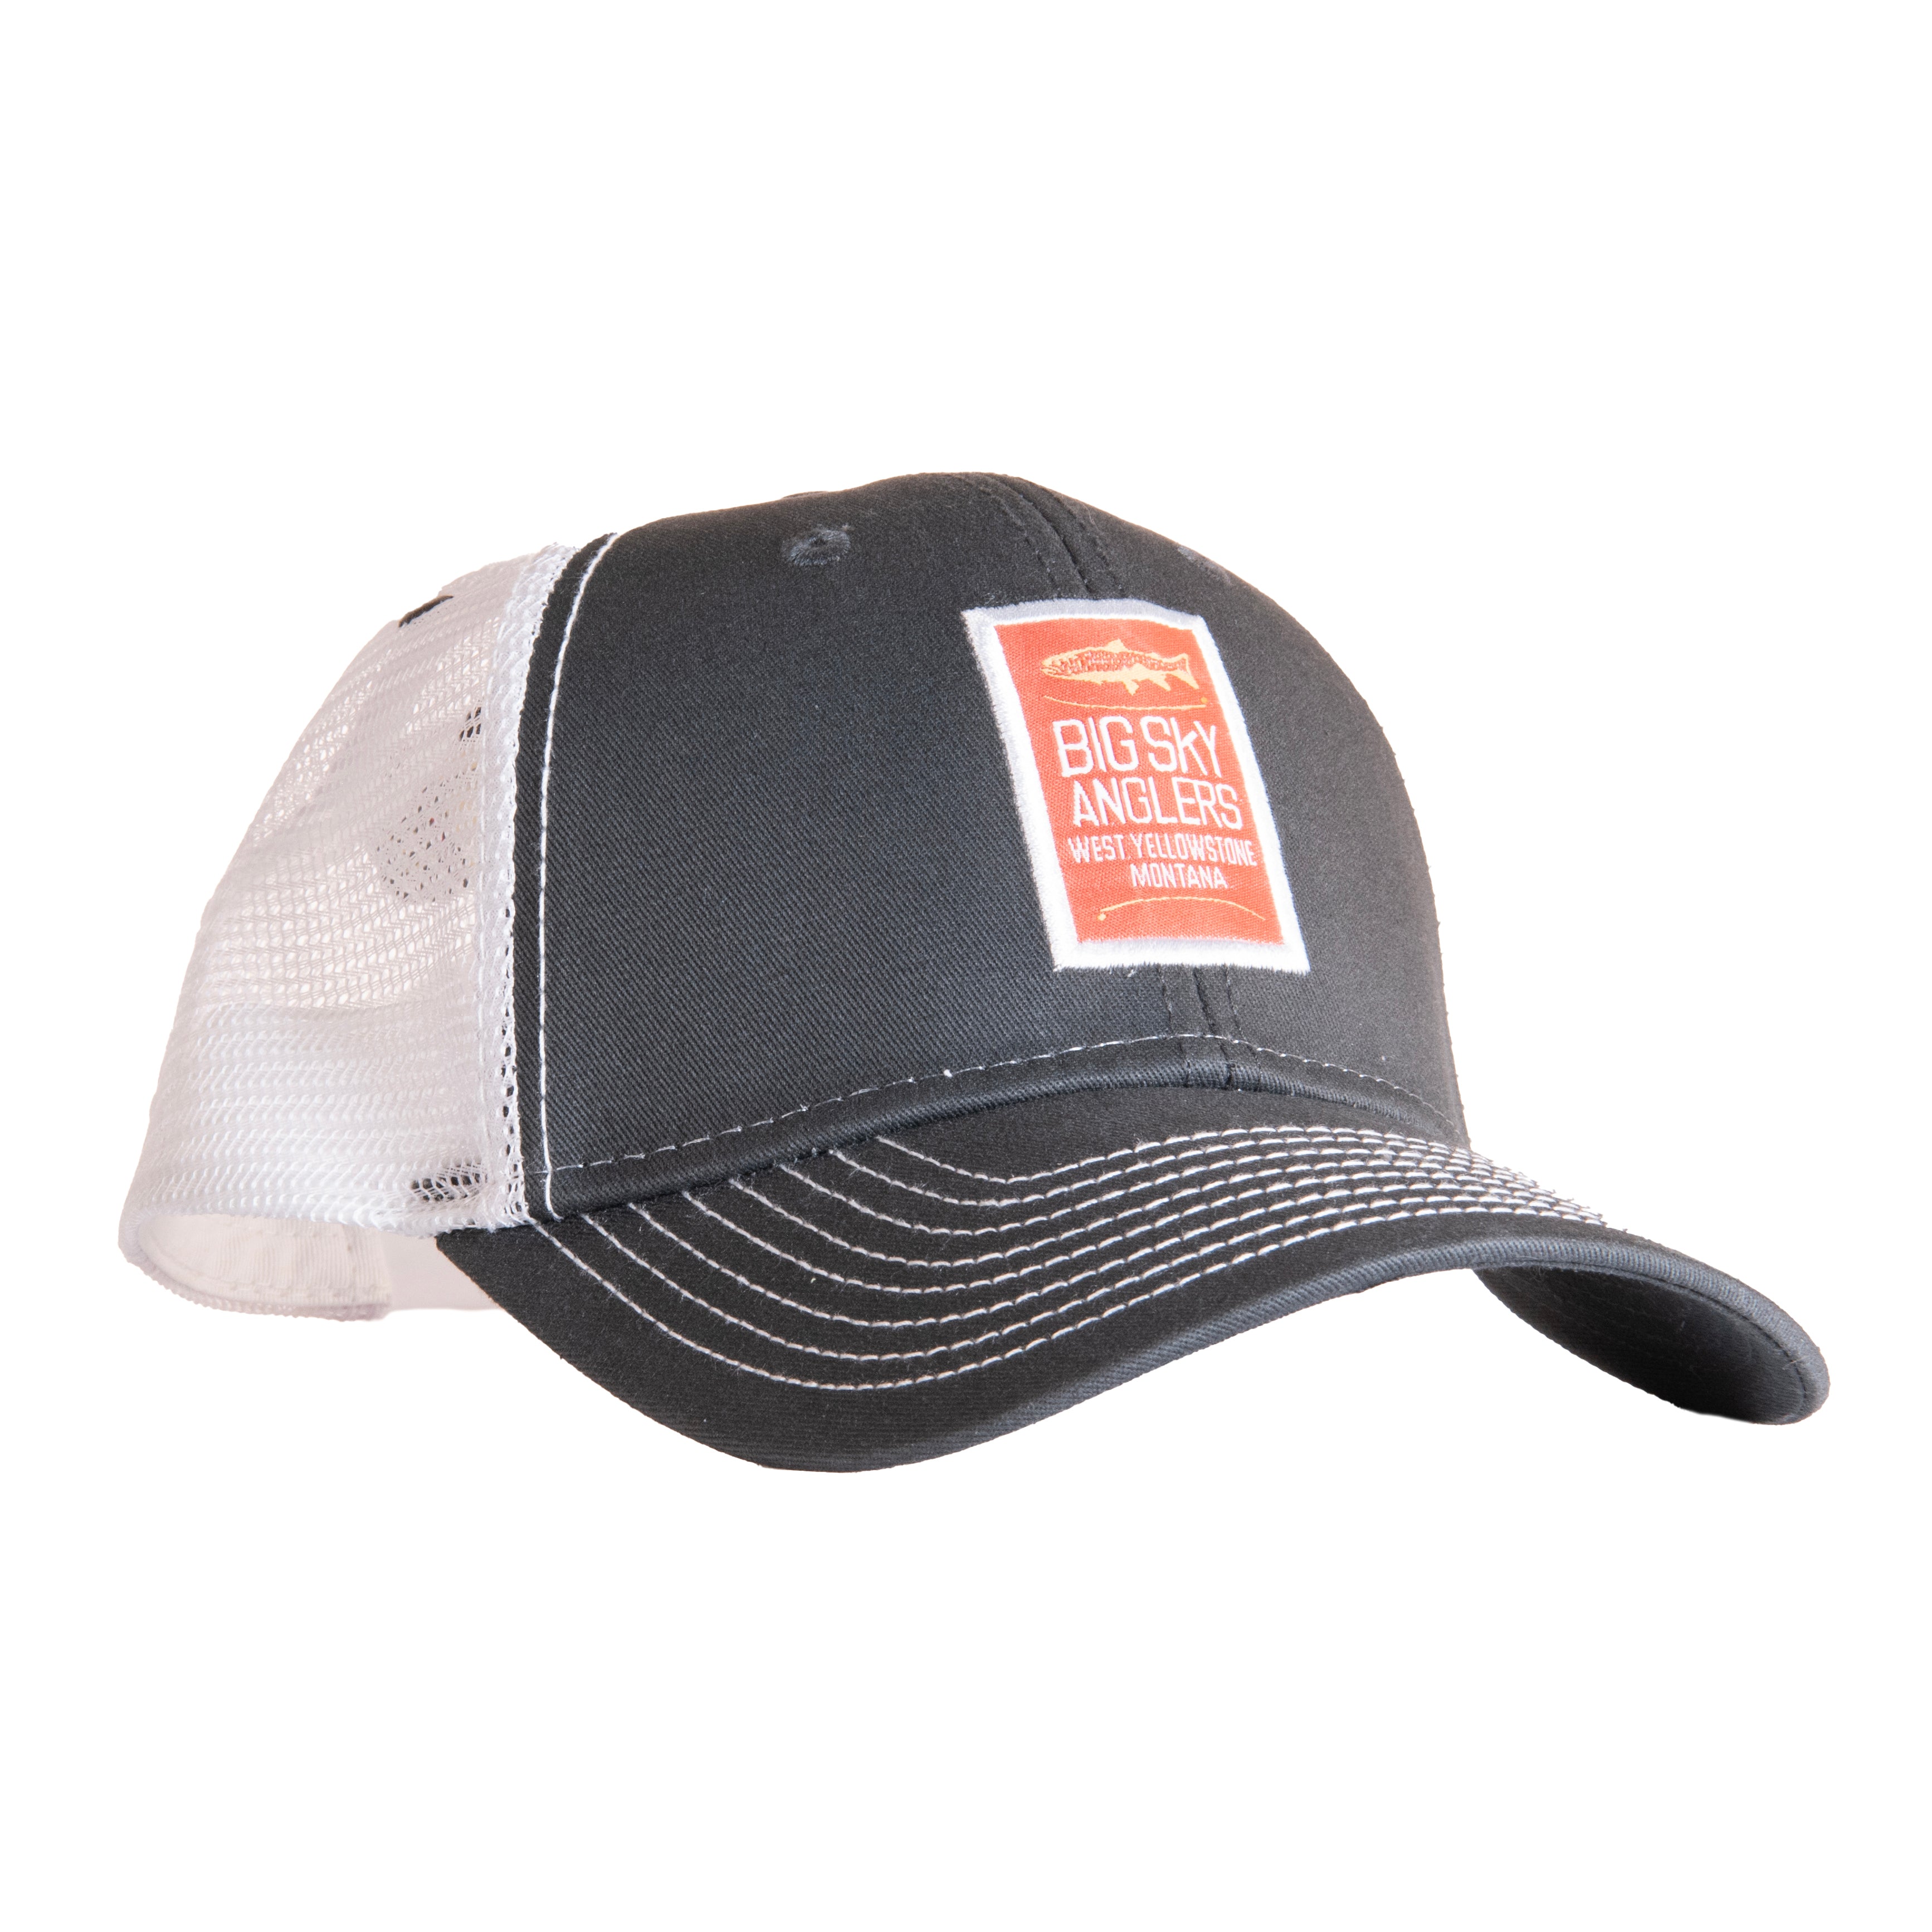  LARIX GEAR Montana Fly Fishing Hat, Public Access Black Gray  Fly Fishing Hats for Men Women : Sports & Outdoors